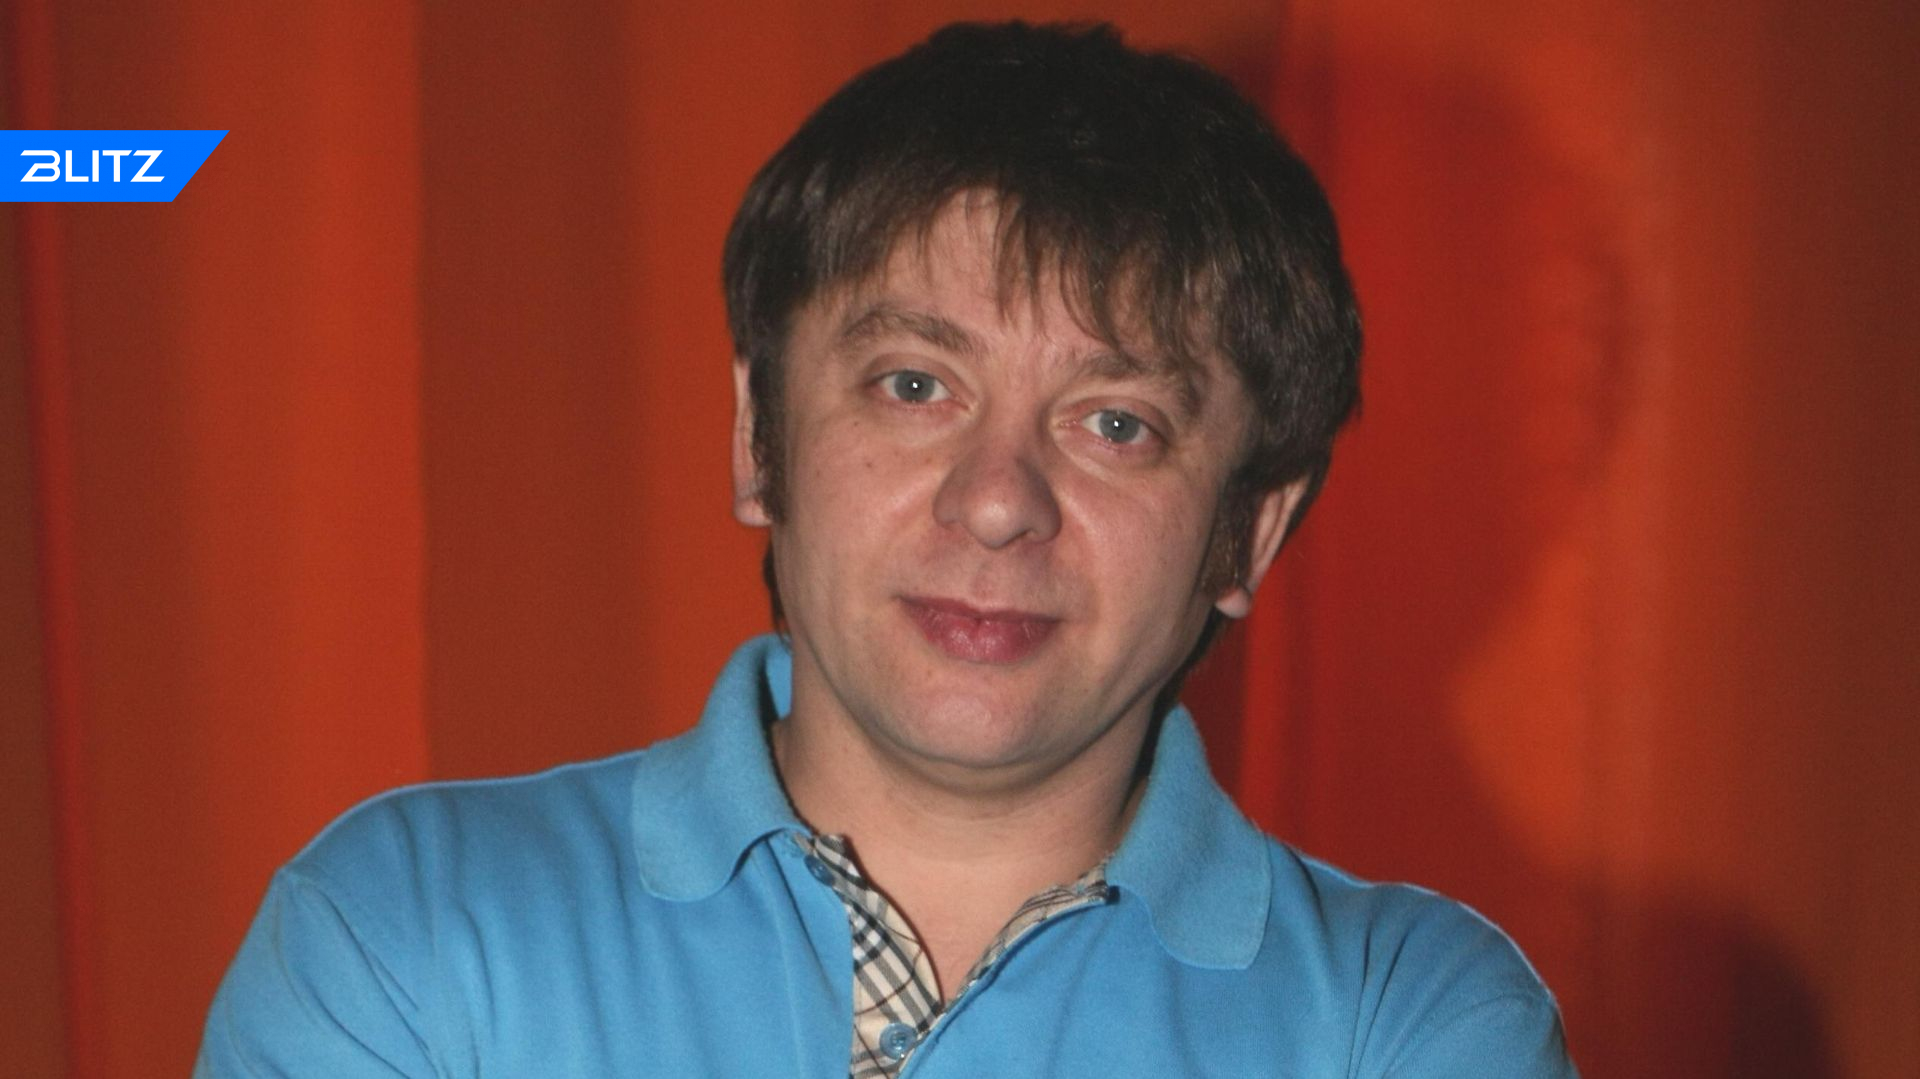 Дмитрий Брекоткин